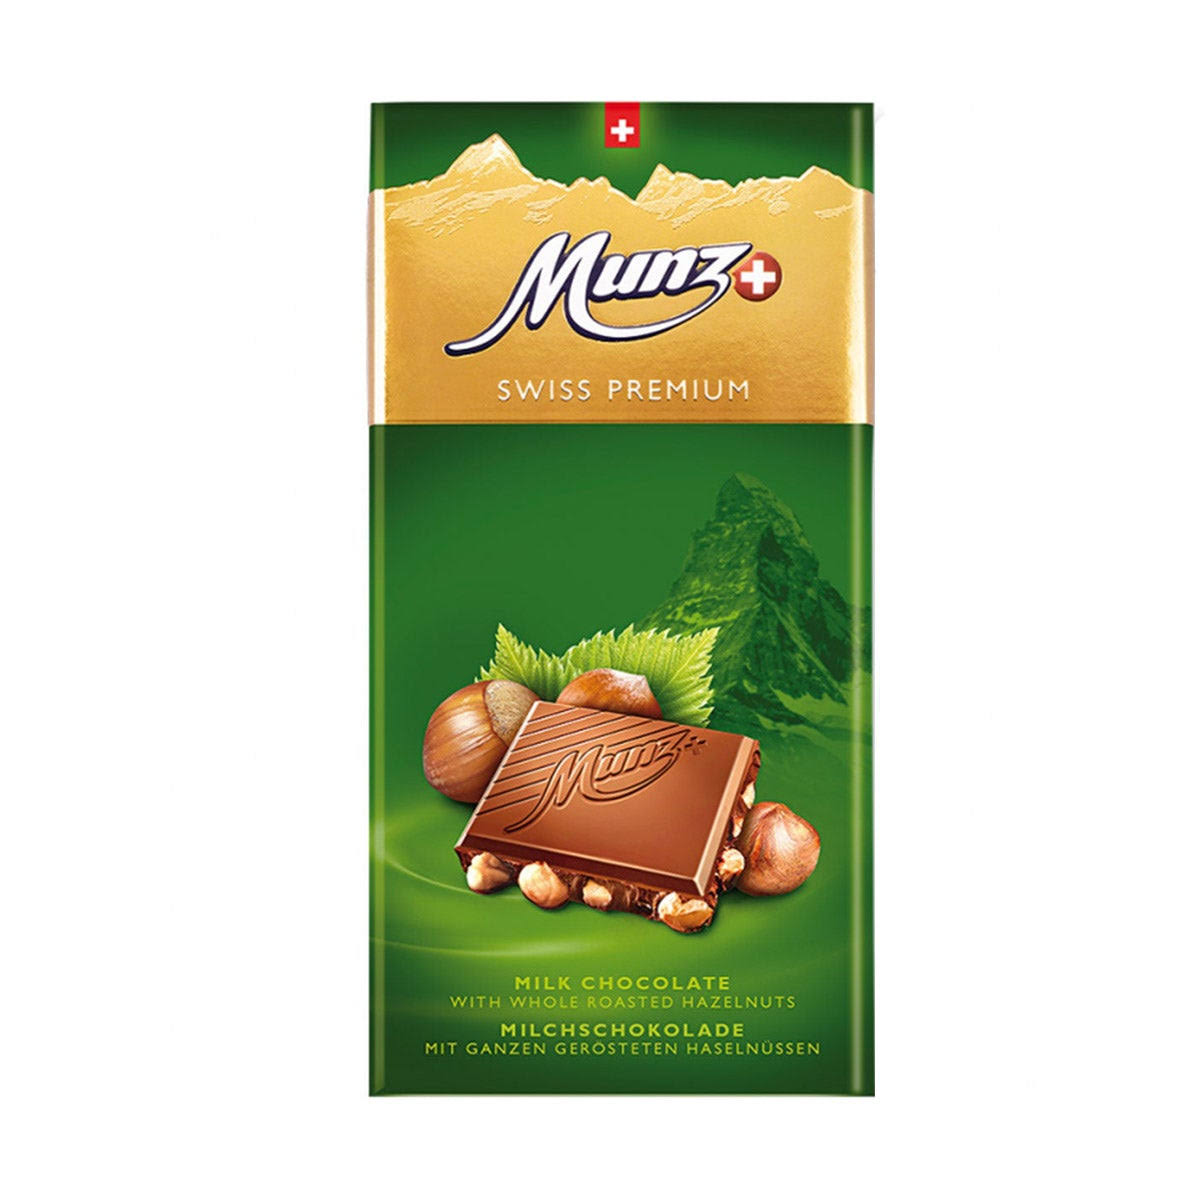 Munz Swiss Premium Milk Chocolate with Whole Roasted Hazelnuts - 100g